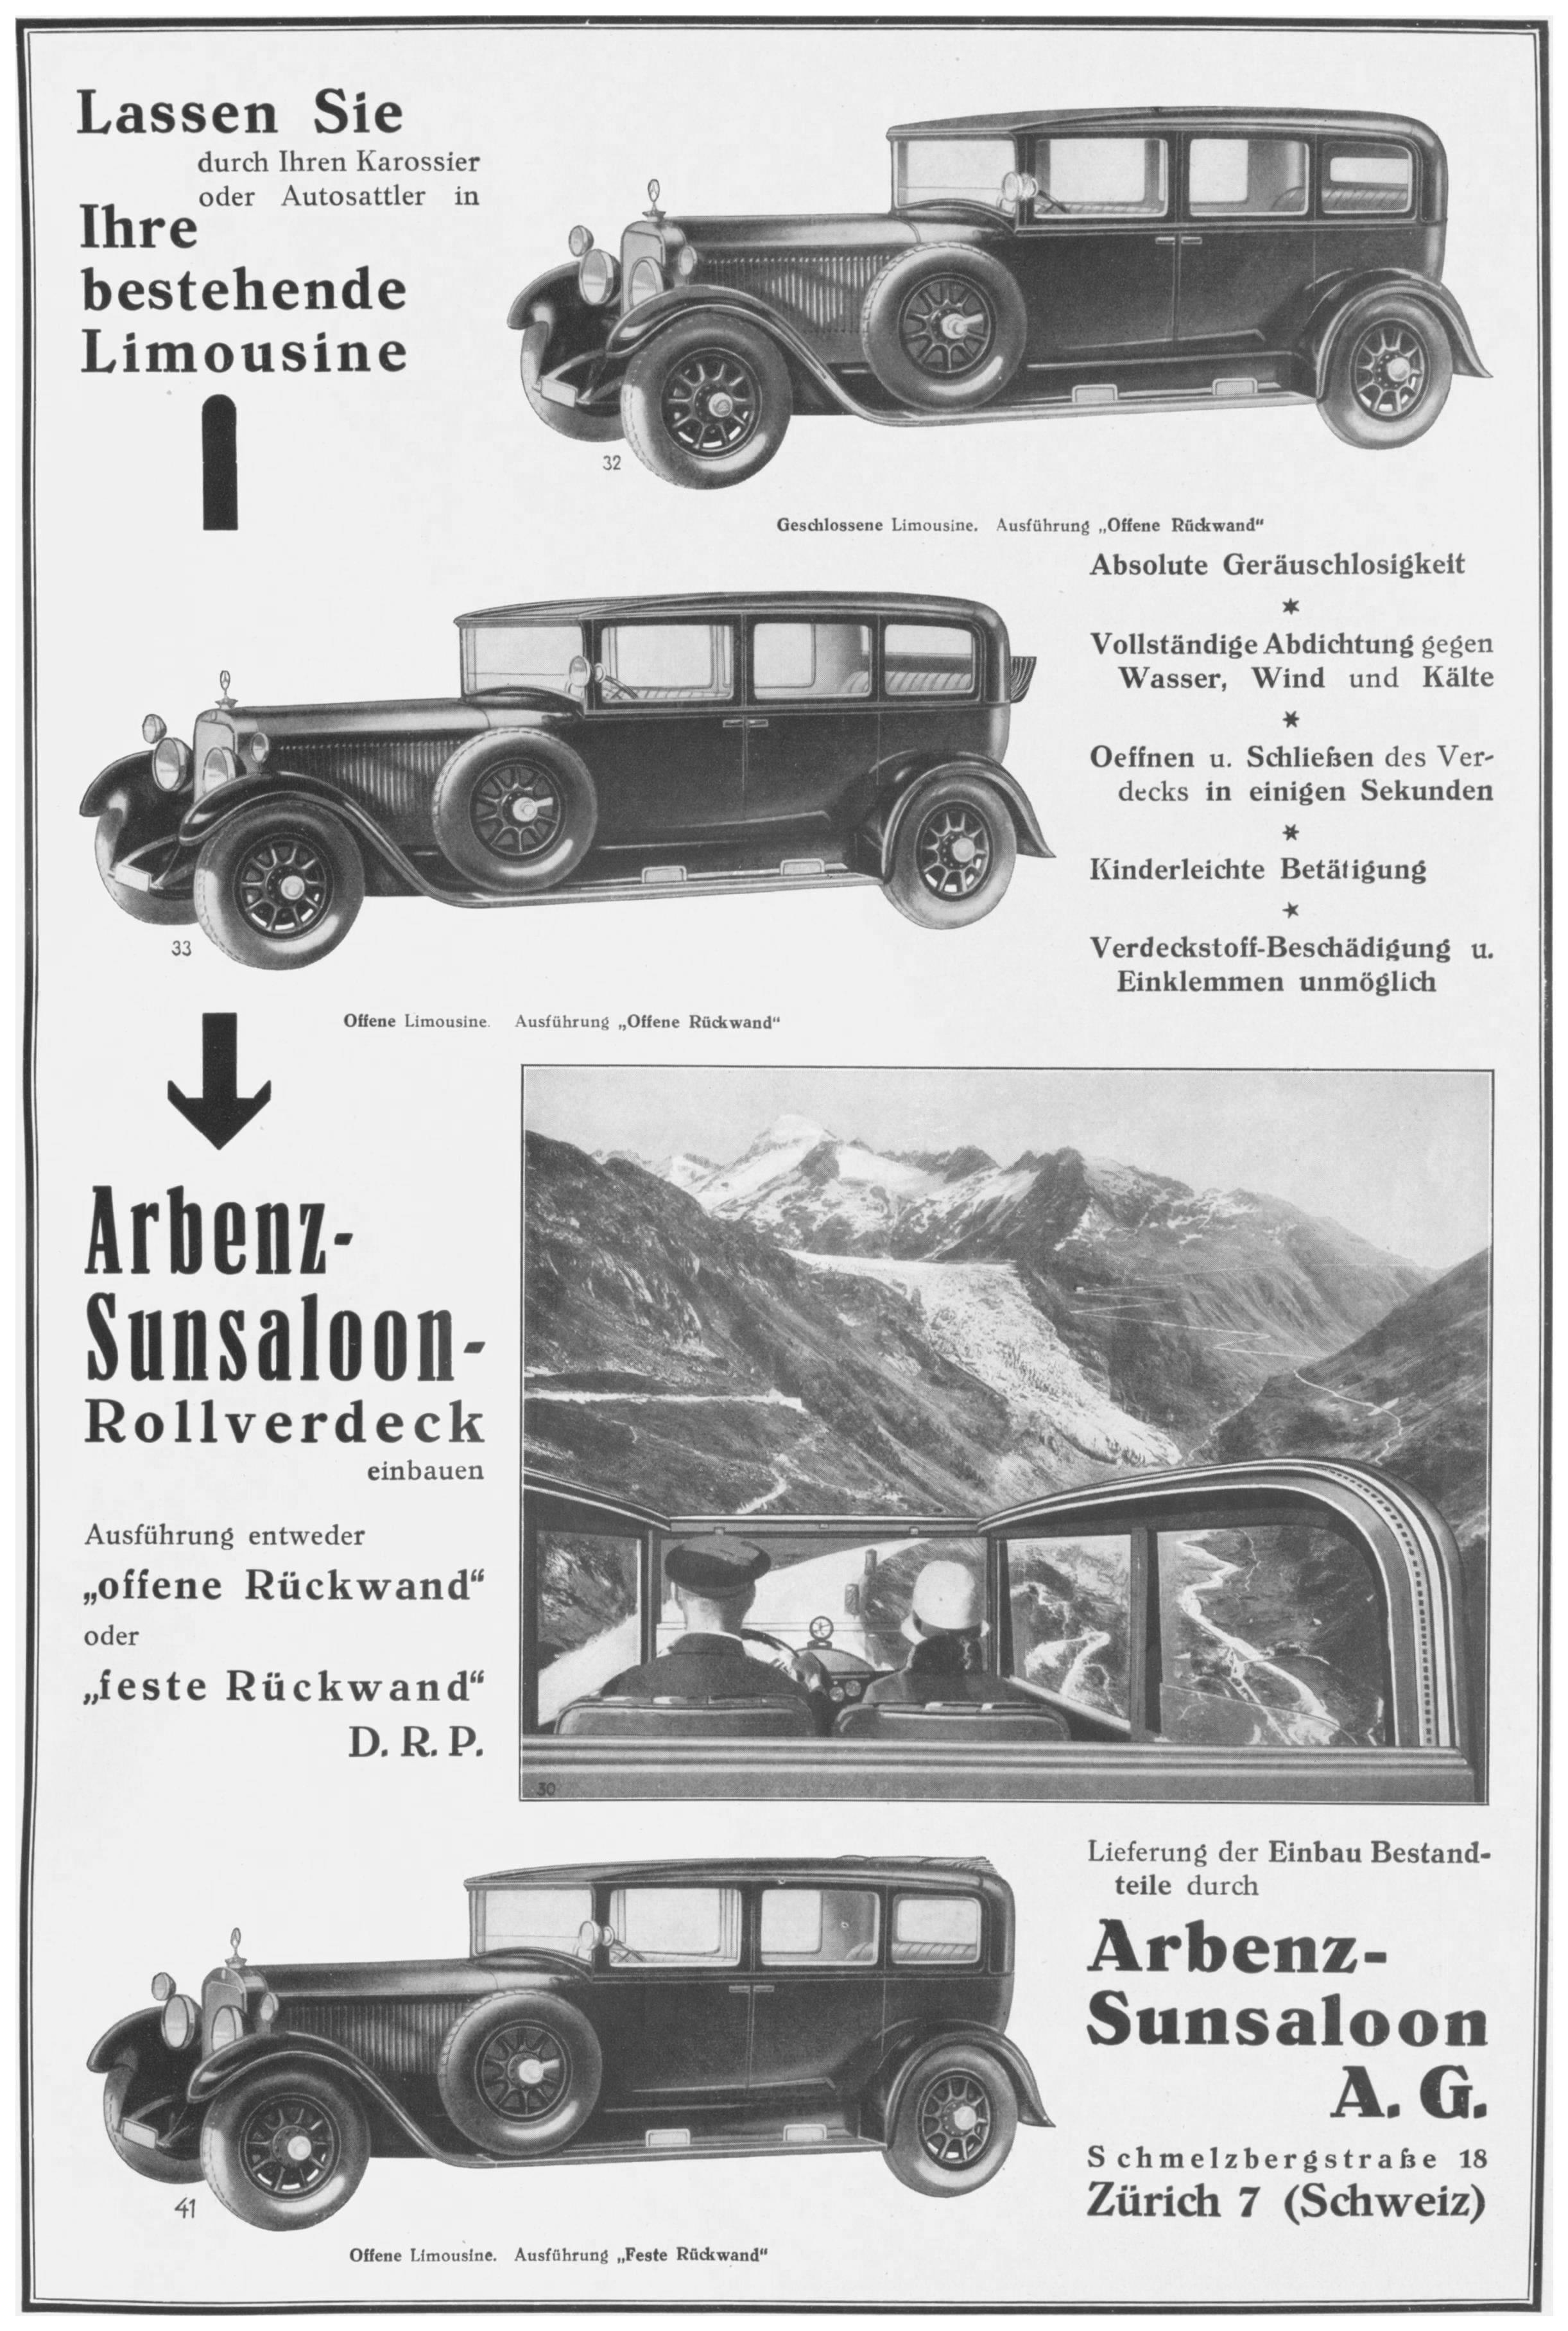 Arbenz-Sunsallon 1930 0.jpg